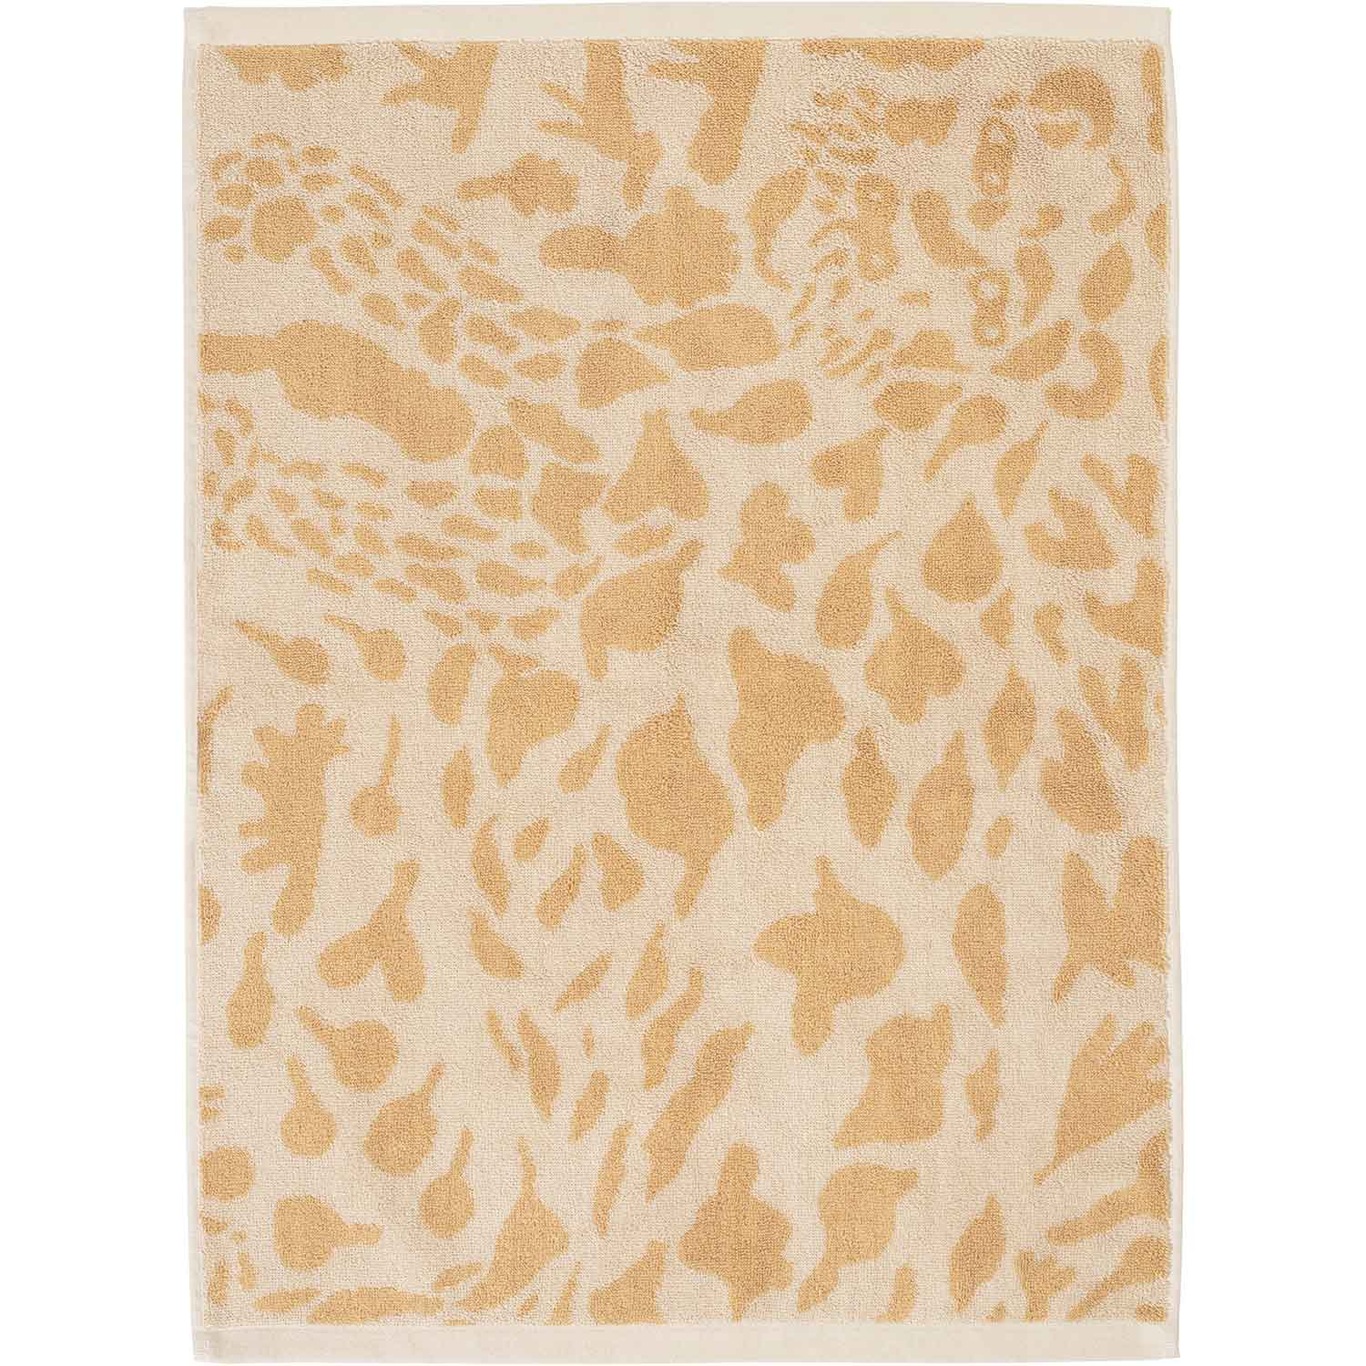 Oiva Toikka Collection Handduk, 50x70 cm, Cheetah Brown